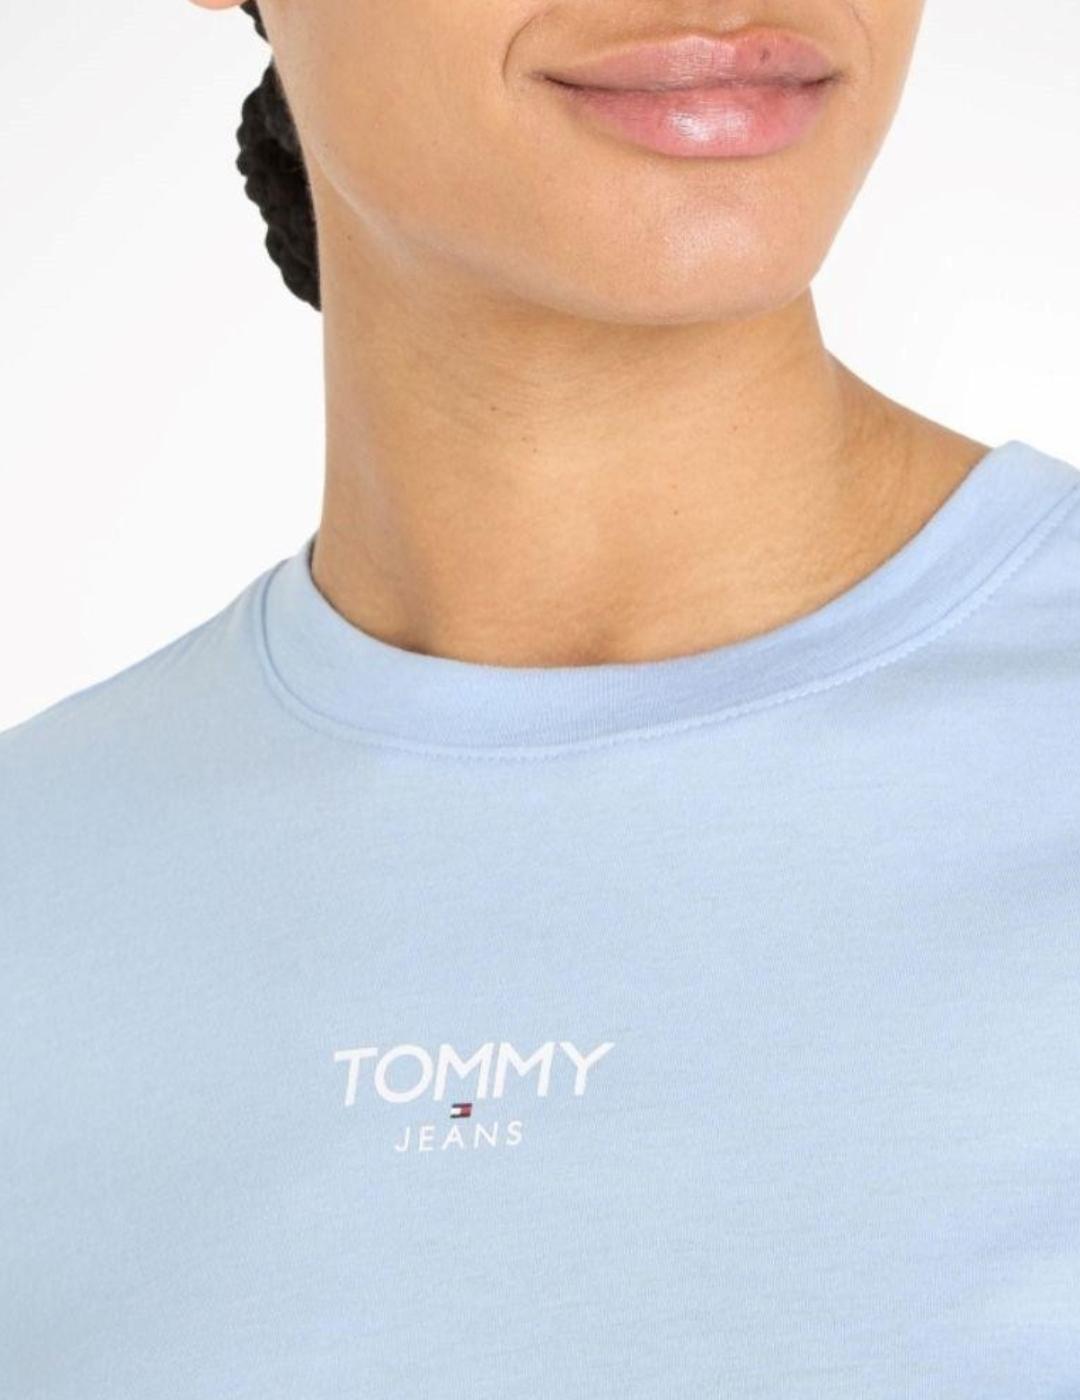 Camiseta Tommy Jeans para Chica azul claro